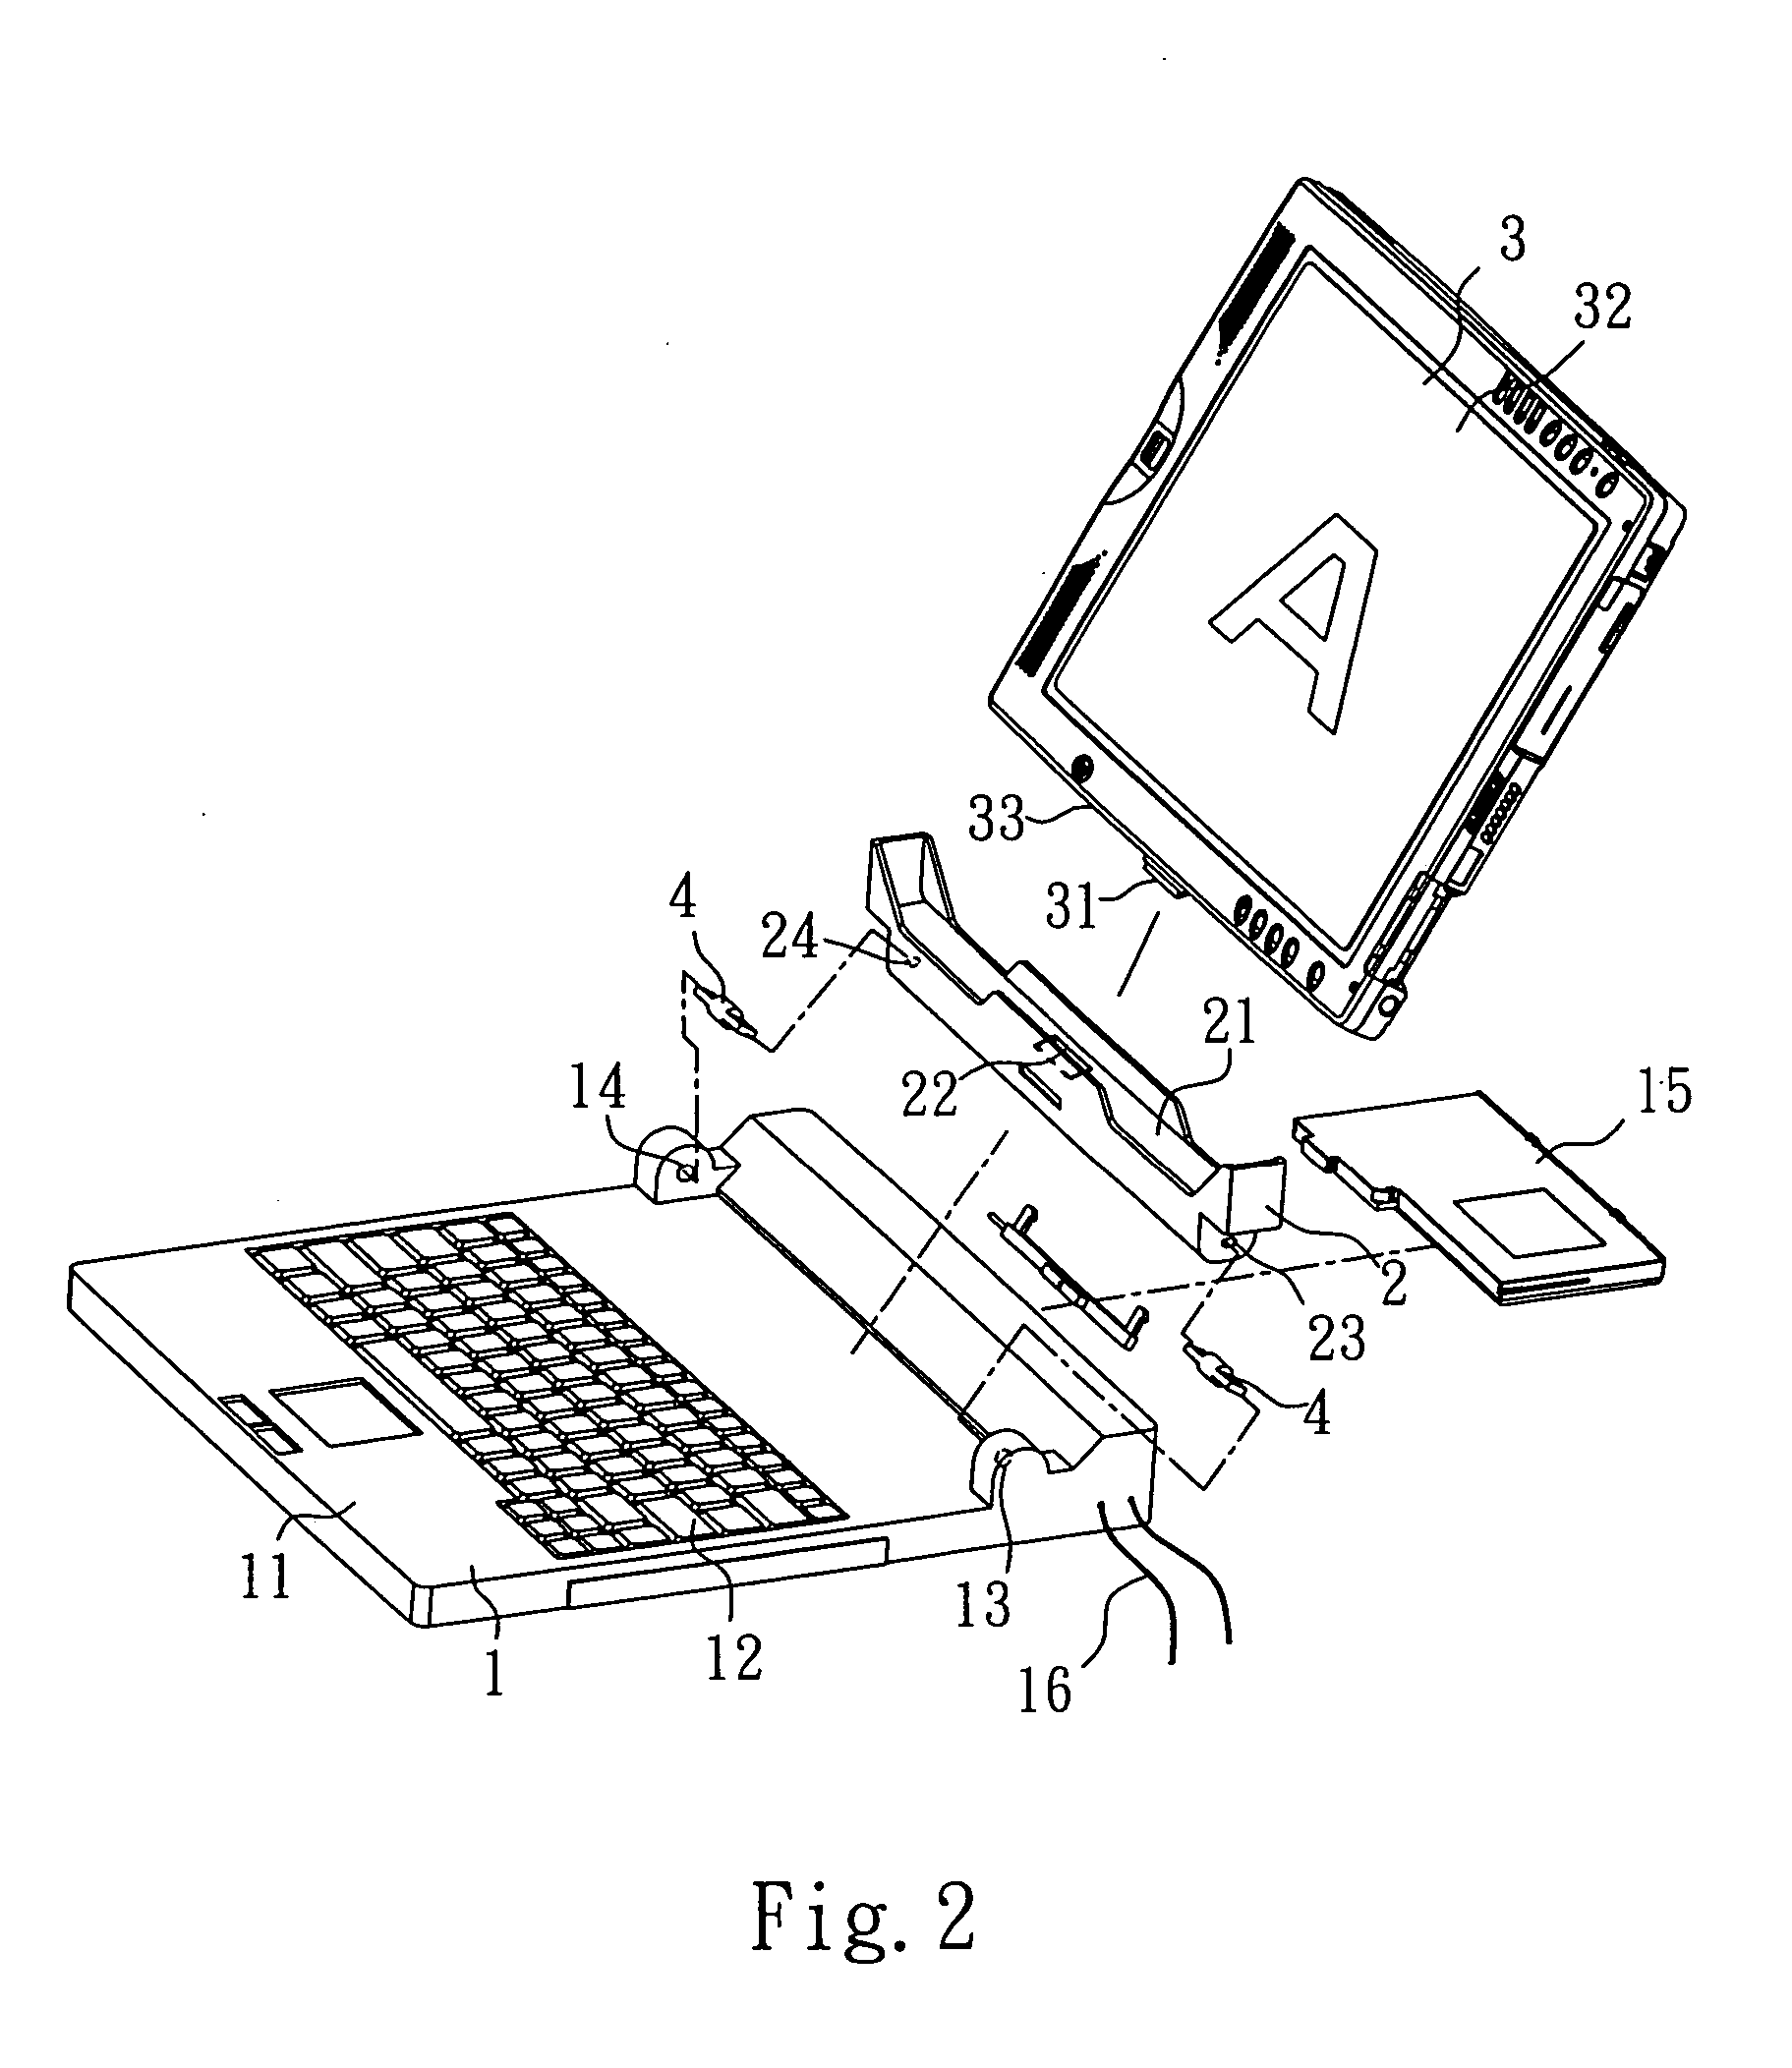 Portable computer and portable docking station arrangement